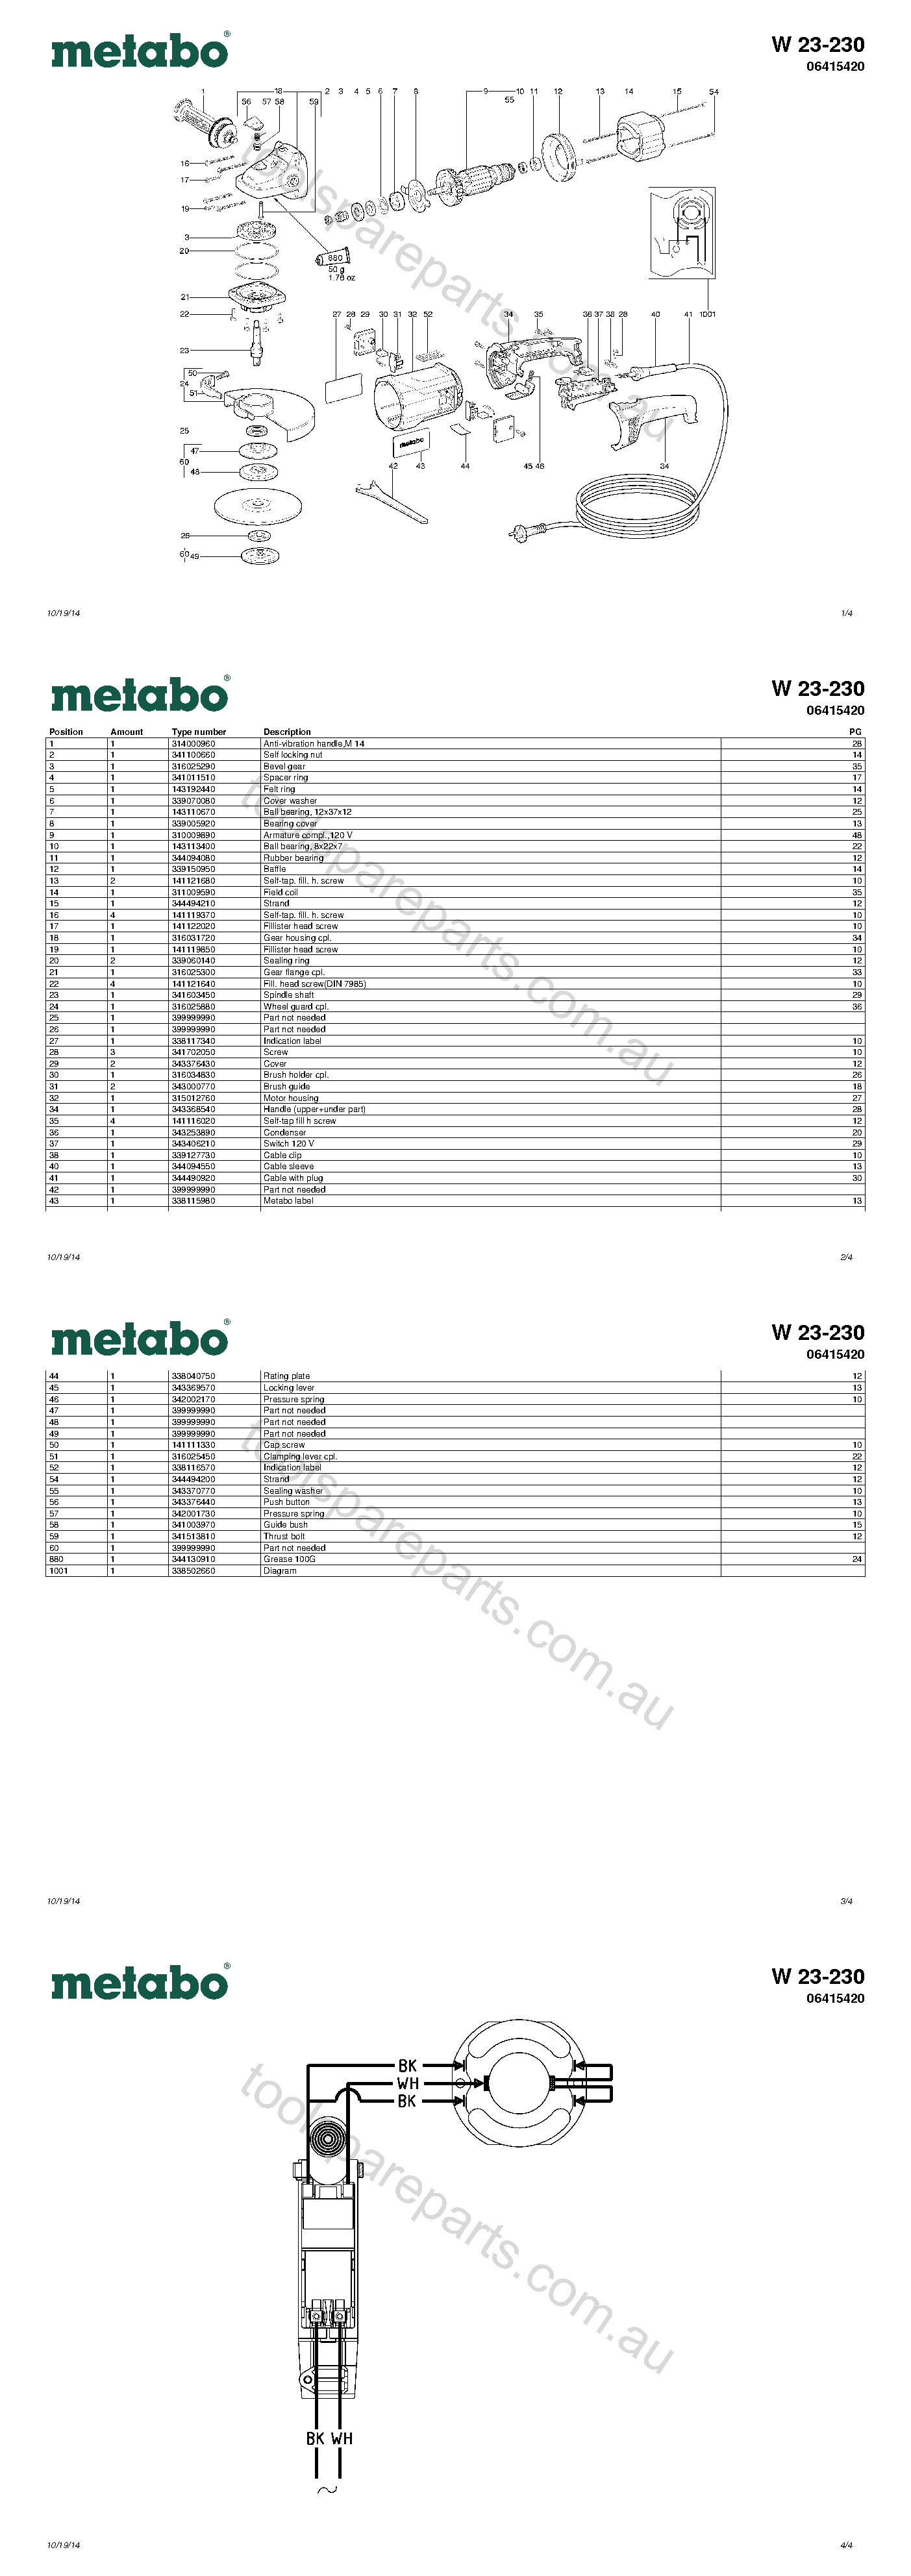 Metabo W 23-230 06415420  Diagram 1